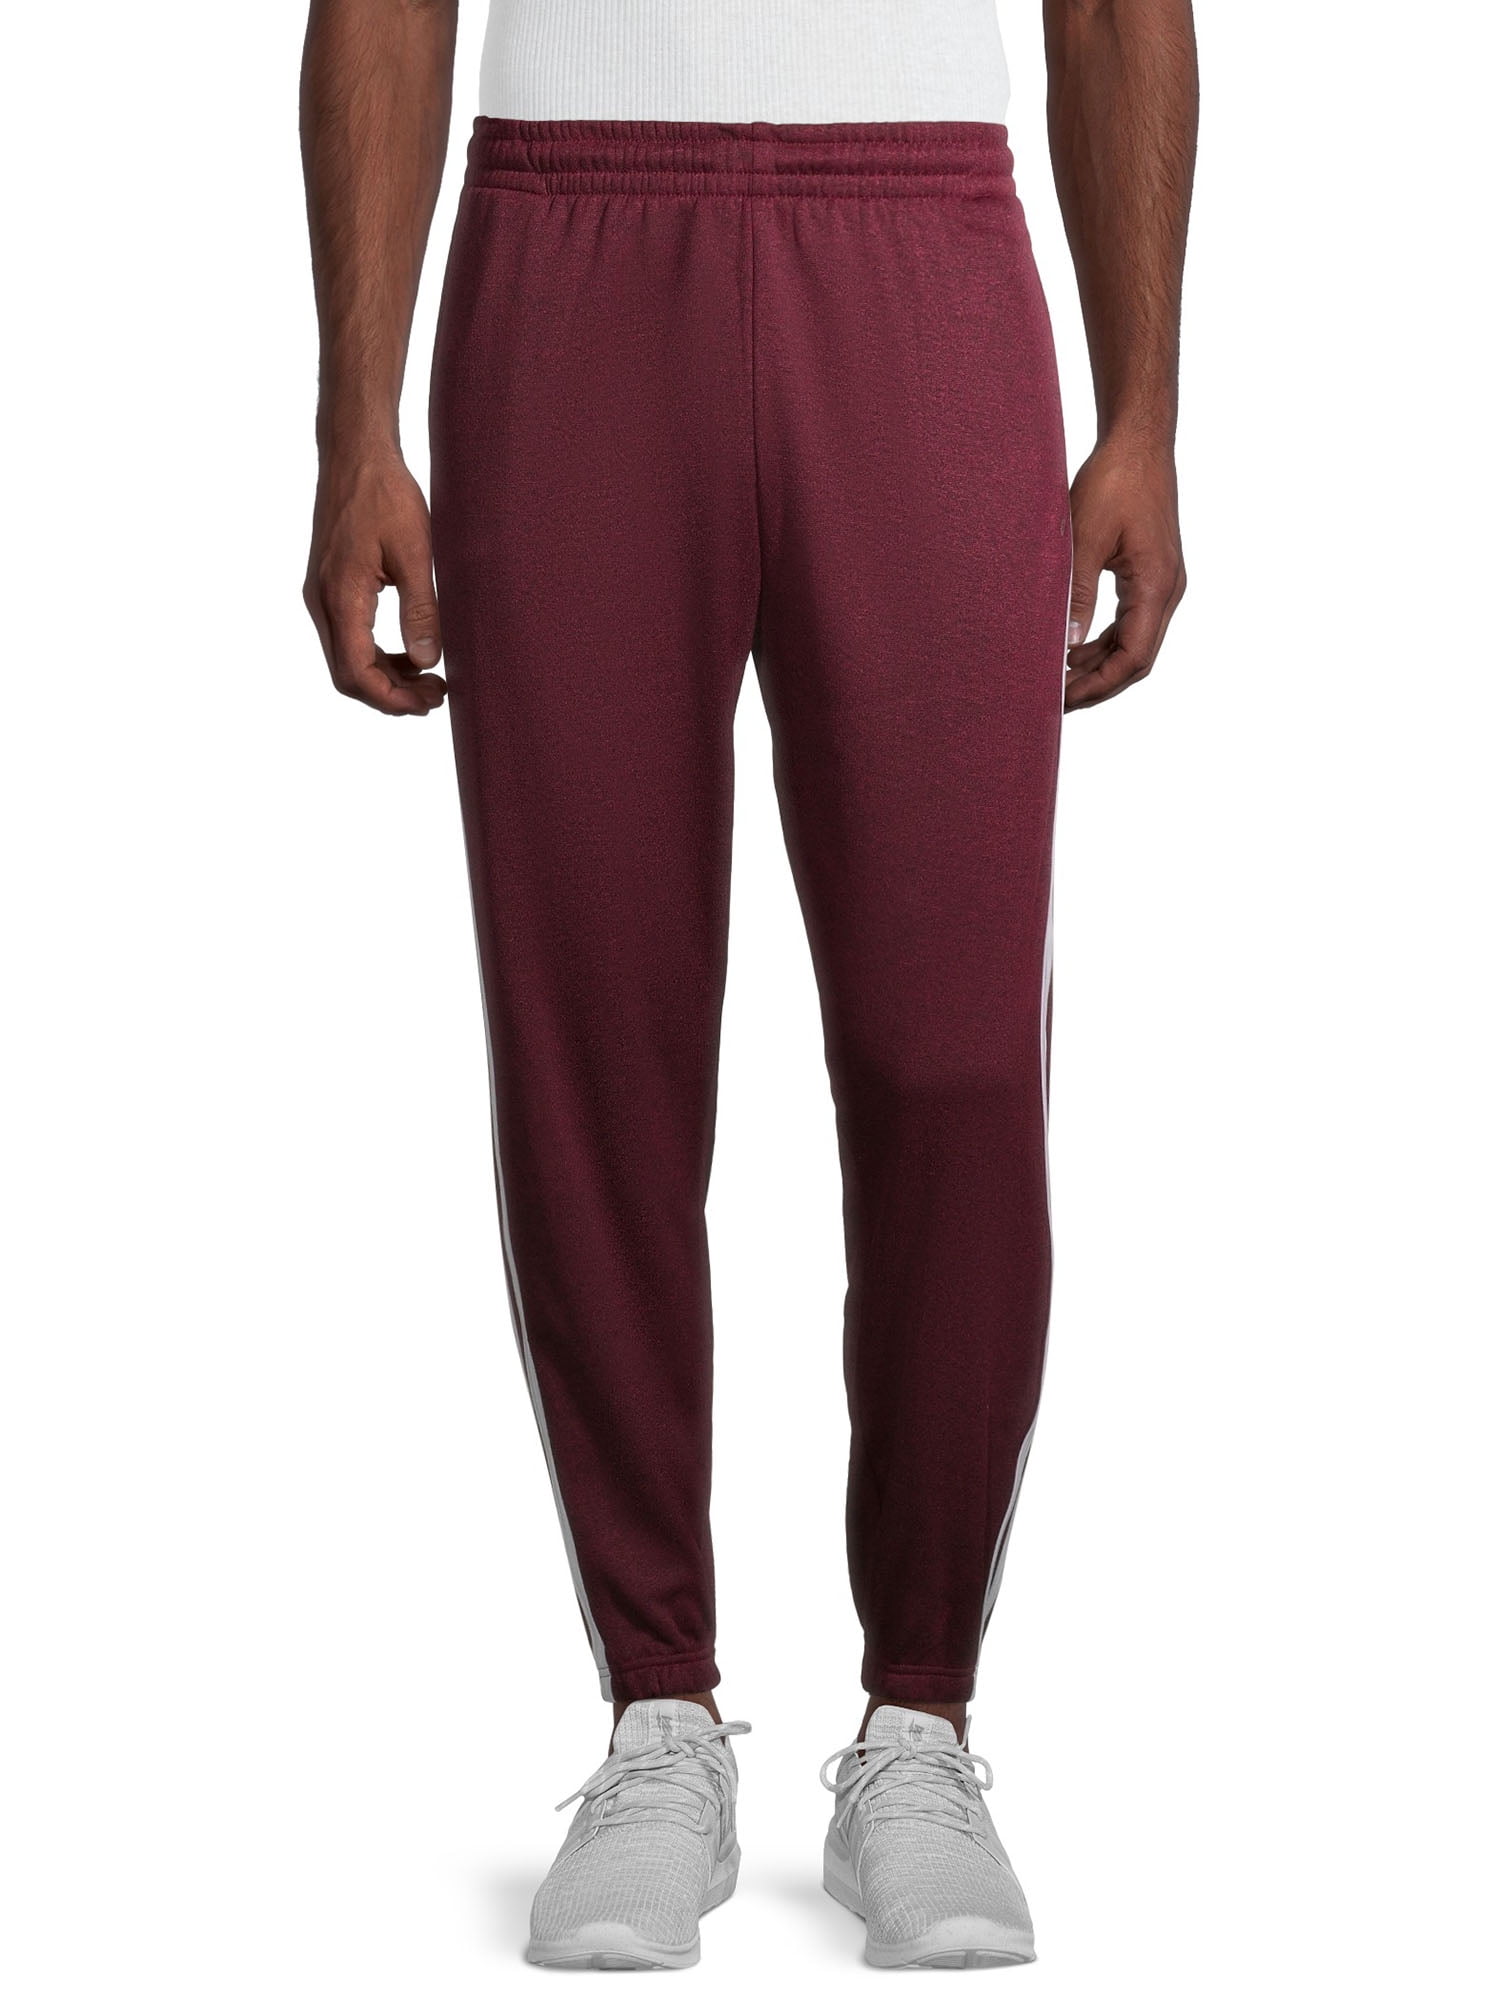 Unipro Men's Fleece Sweatpants with Double Side Stripes - Walmart.com